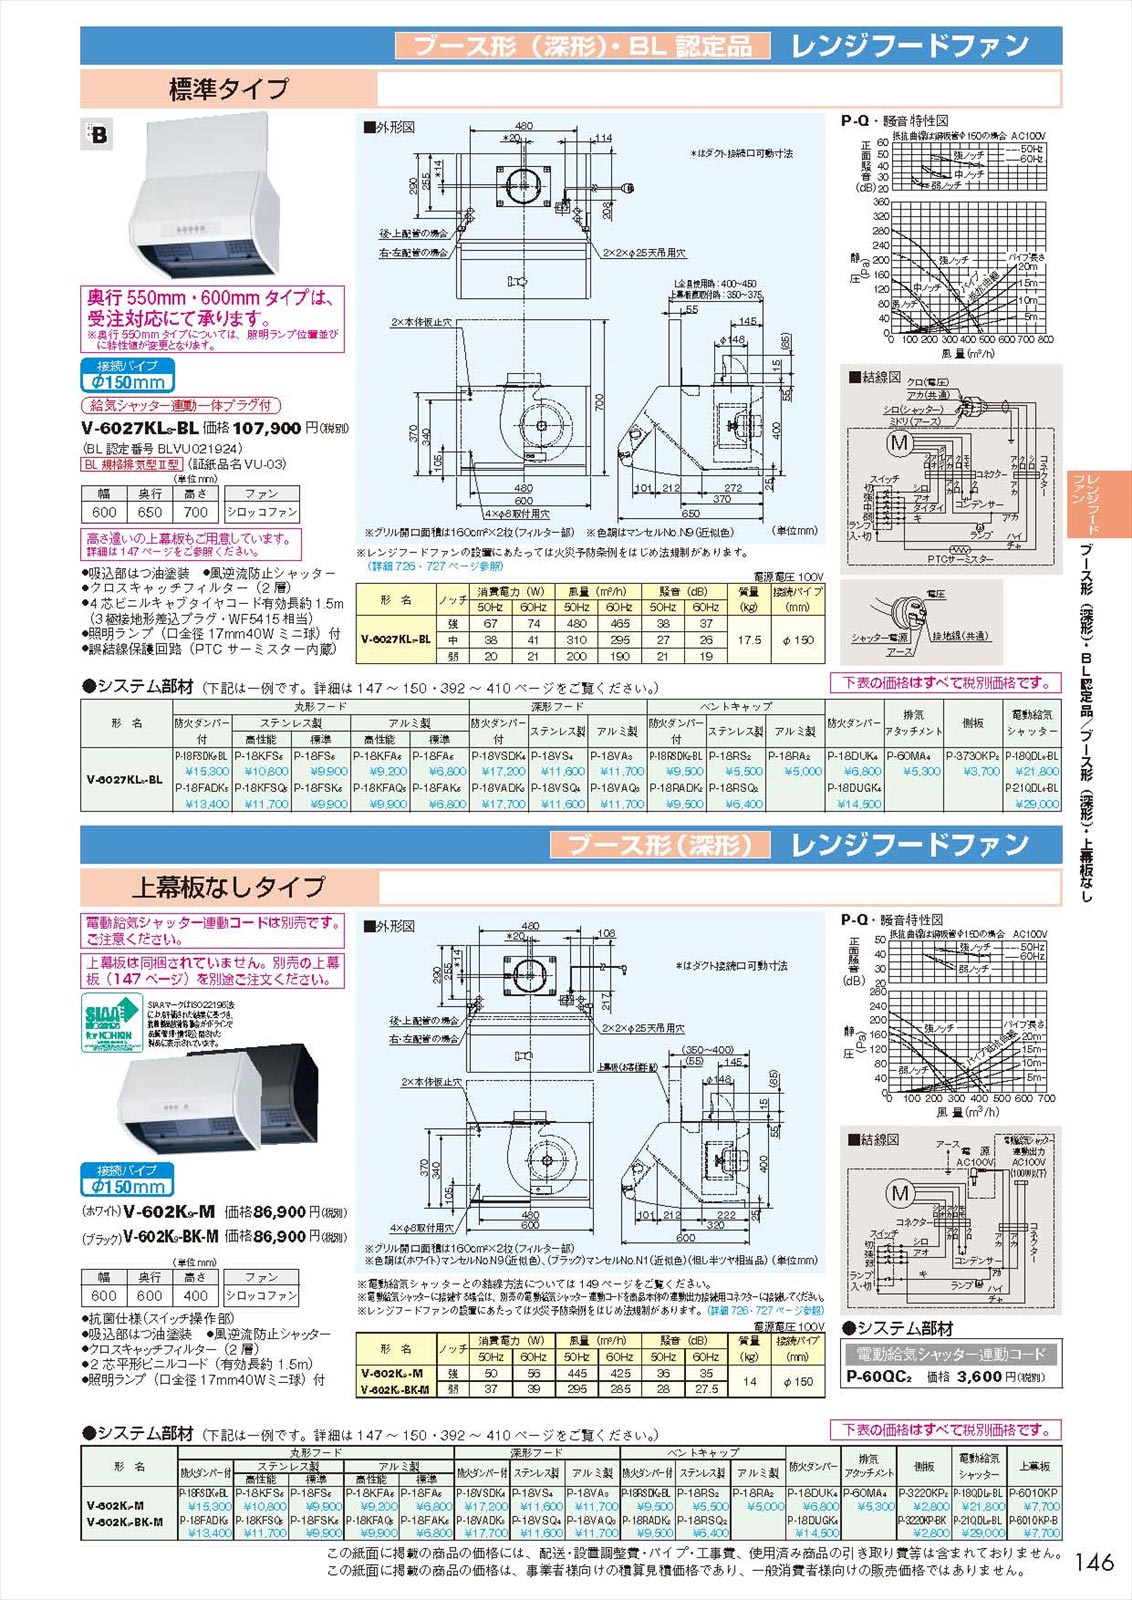 MITSUBISHI V-36K6-BL-BK レンジフードファン (浅形・高静圧・丸排気タイプ) - 3